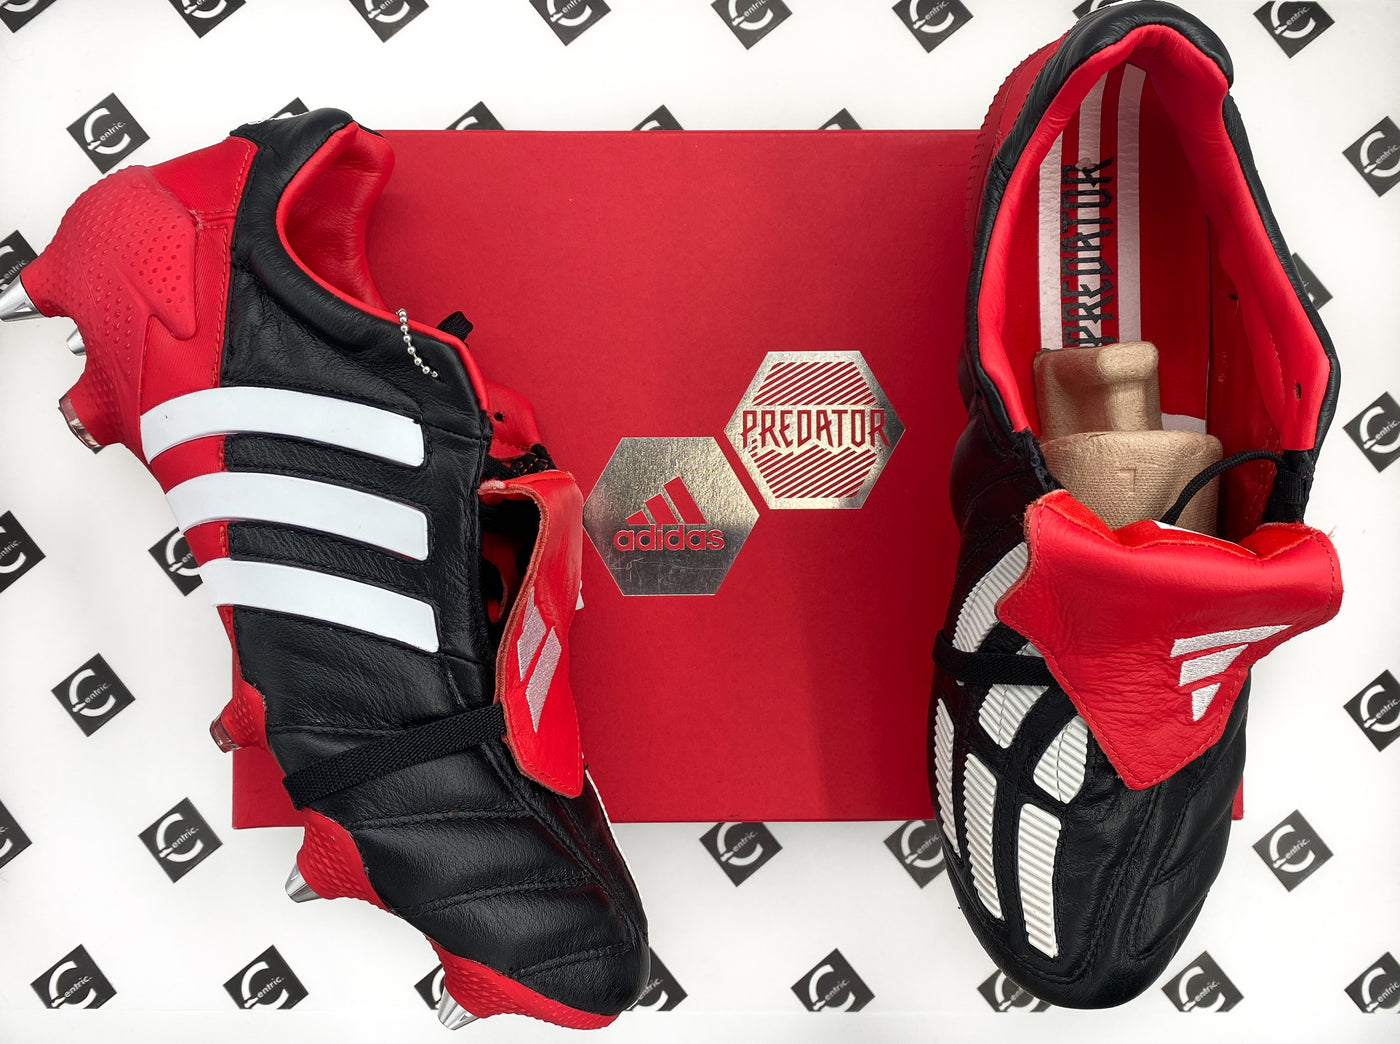 Adidas Predator Mania SG Limited Edition Remake - Bootscentric